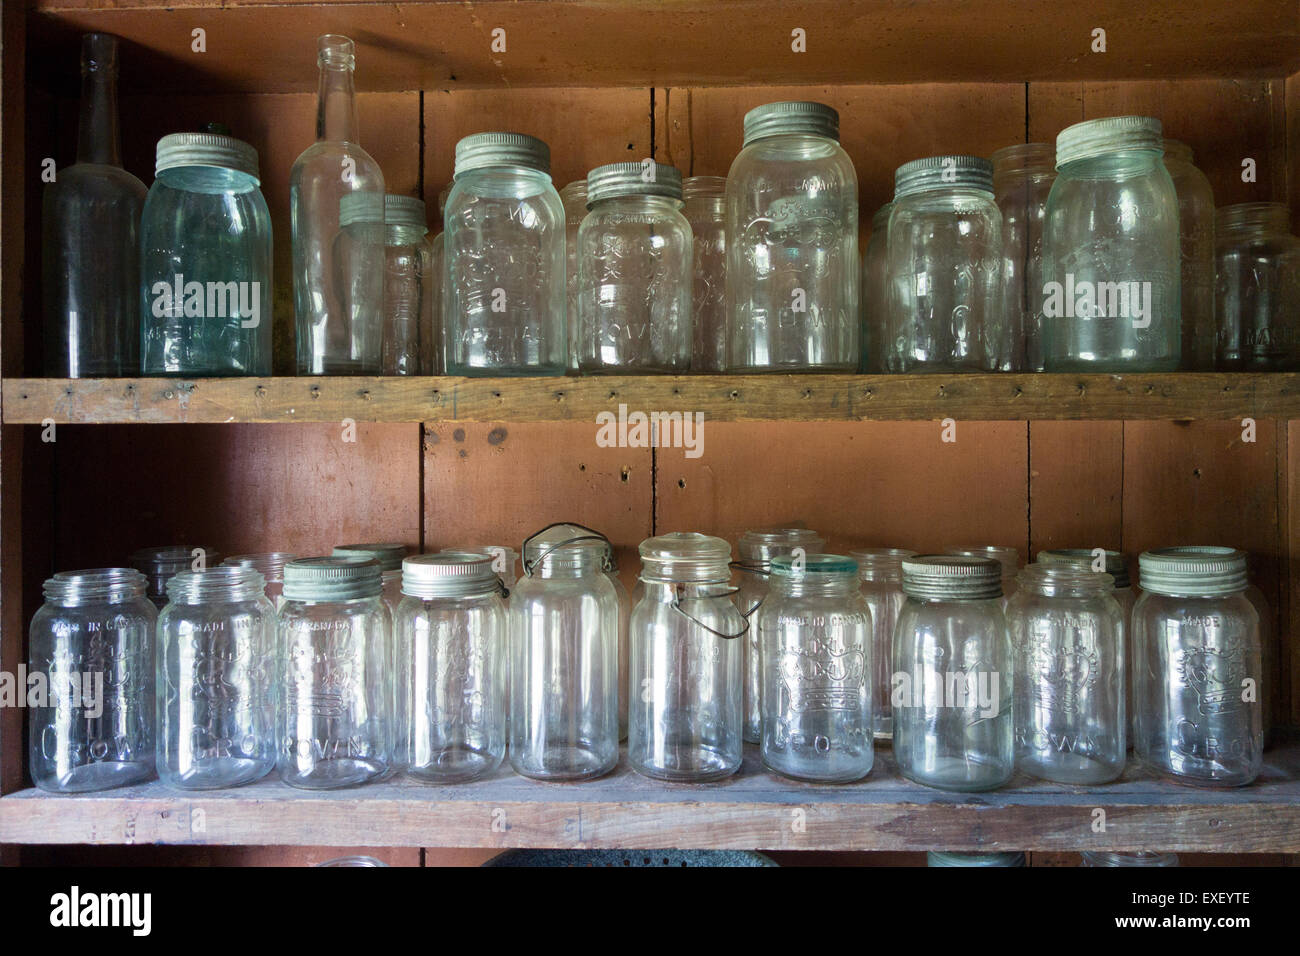 empty glass jar jars shelf shelves Stock Photo